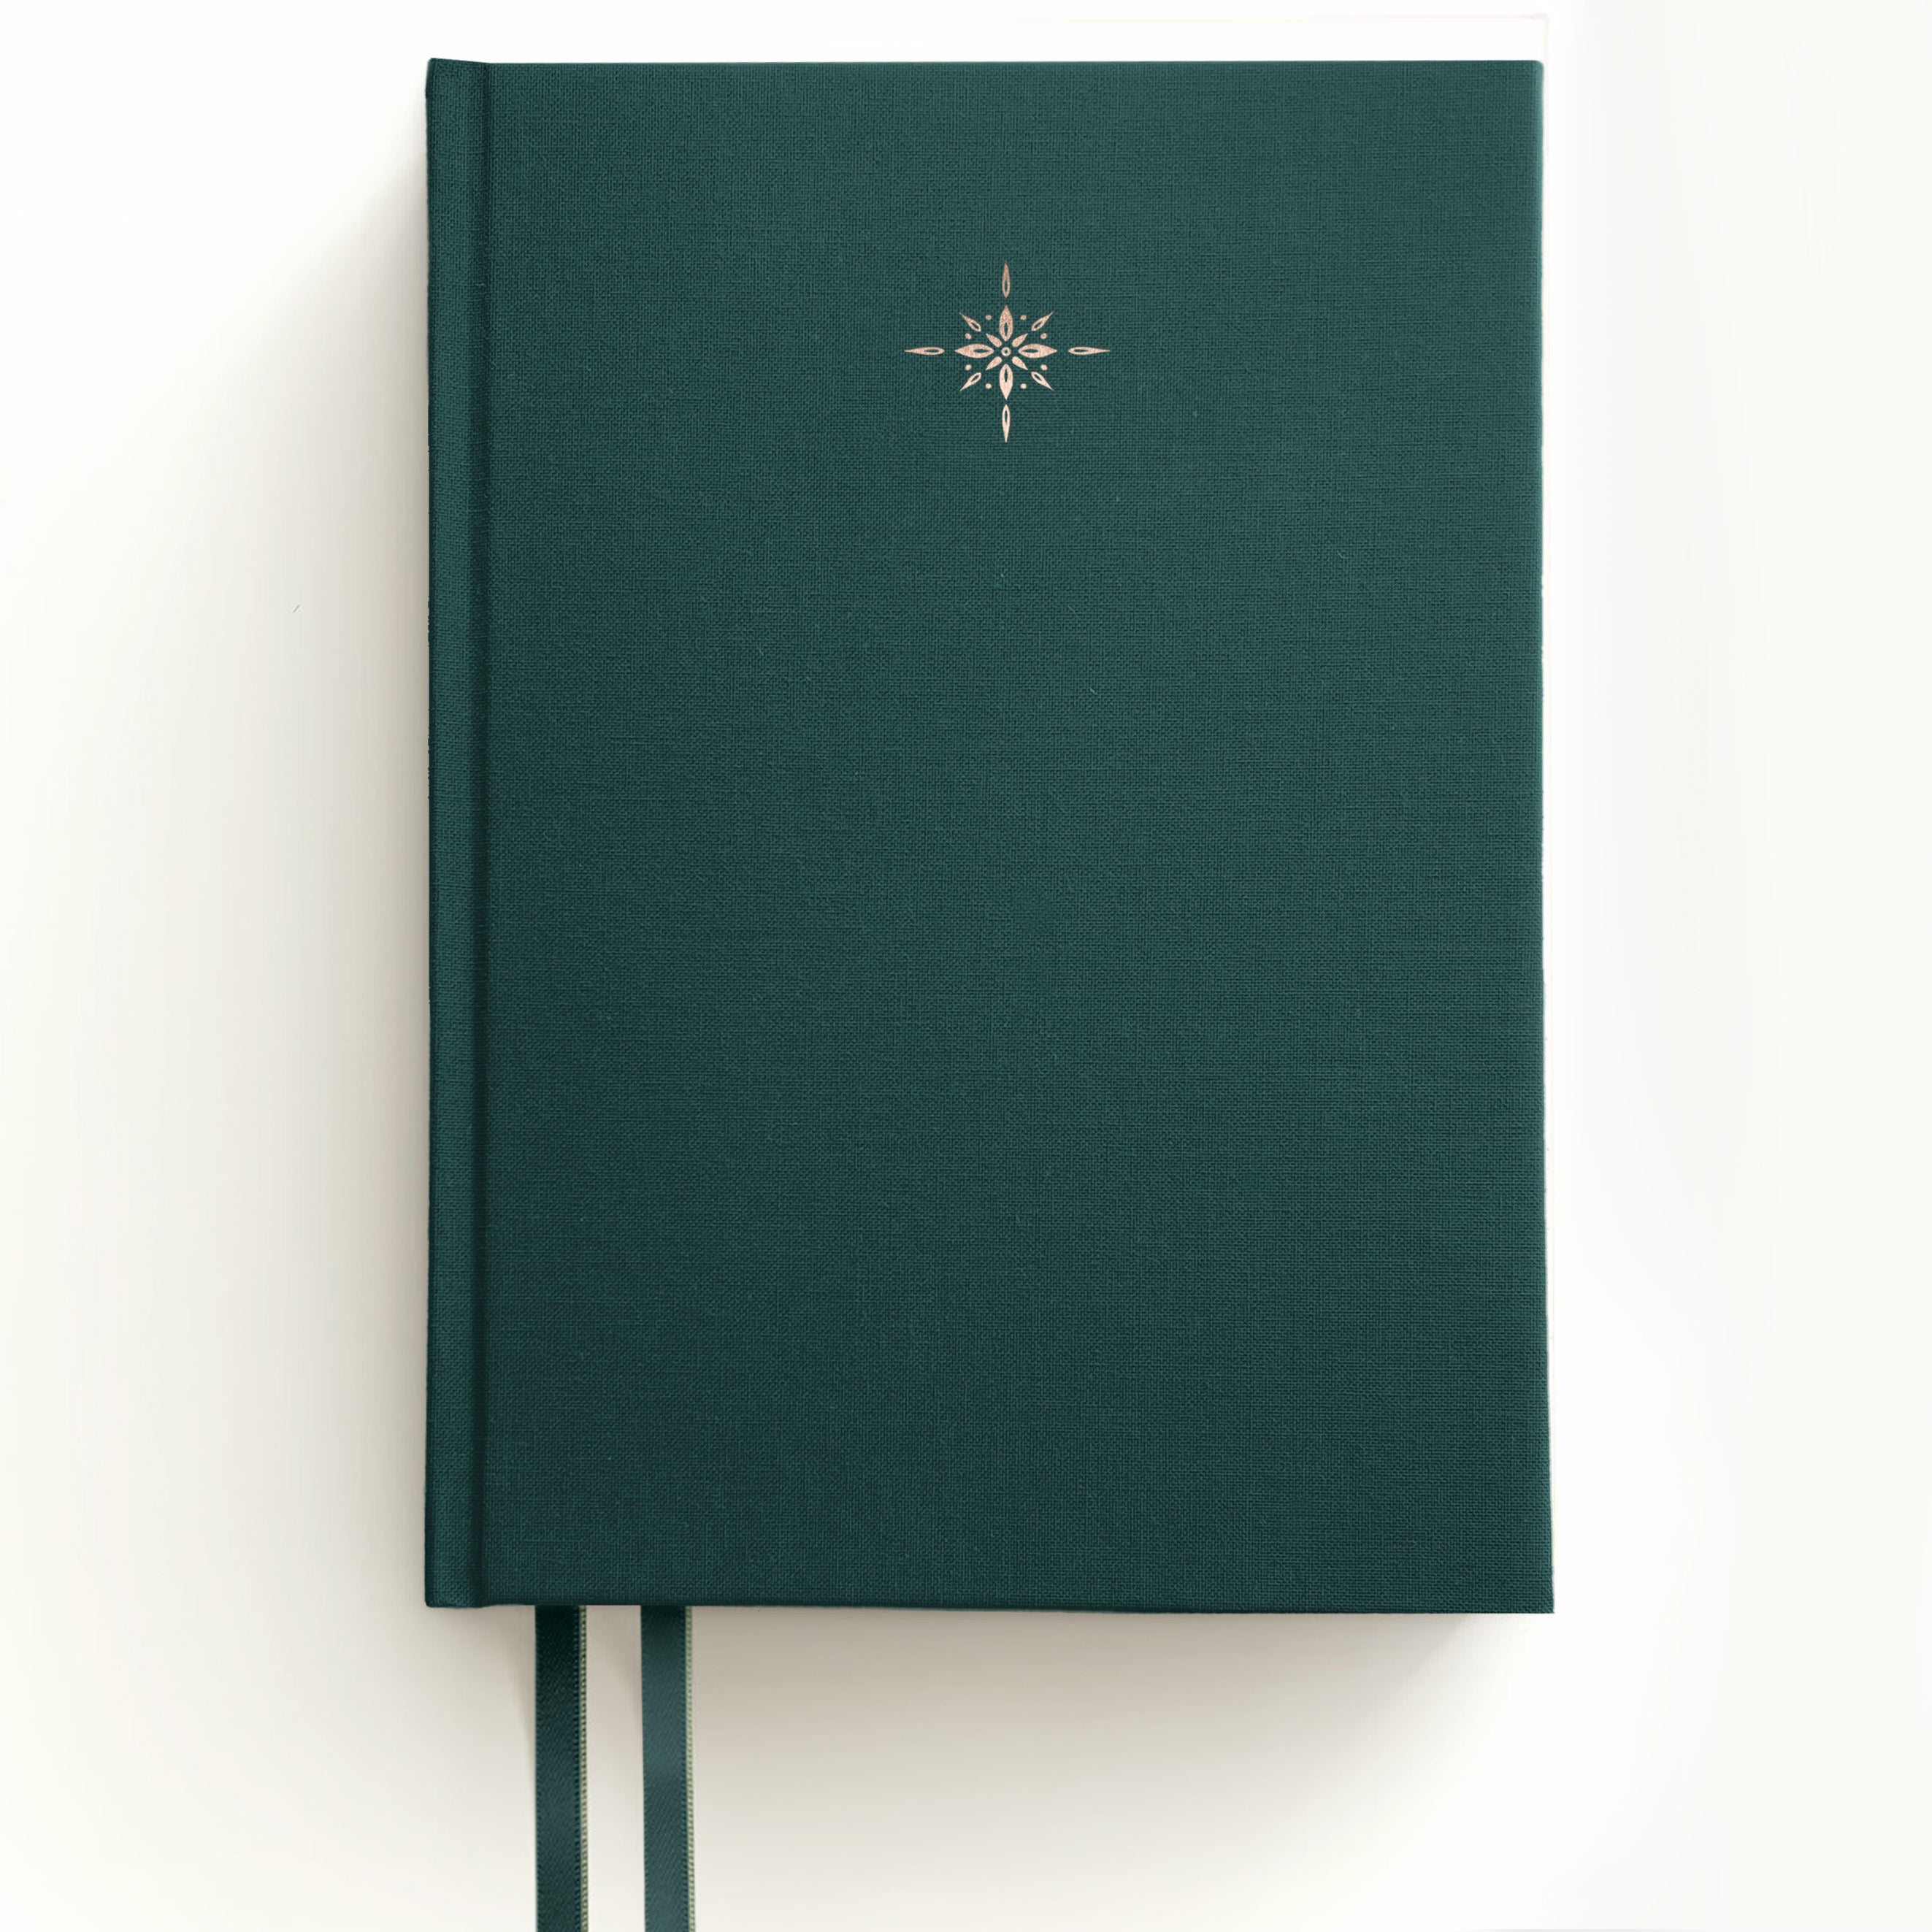 Luminé Graph Notebook